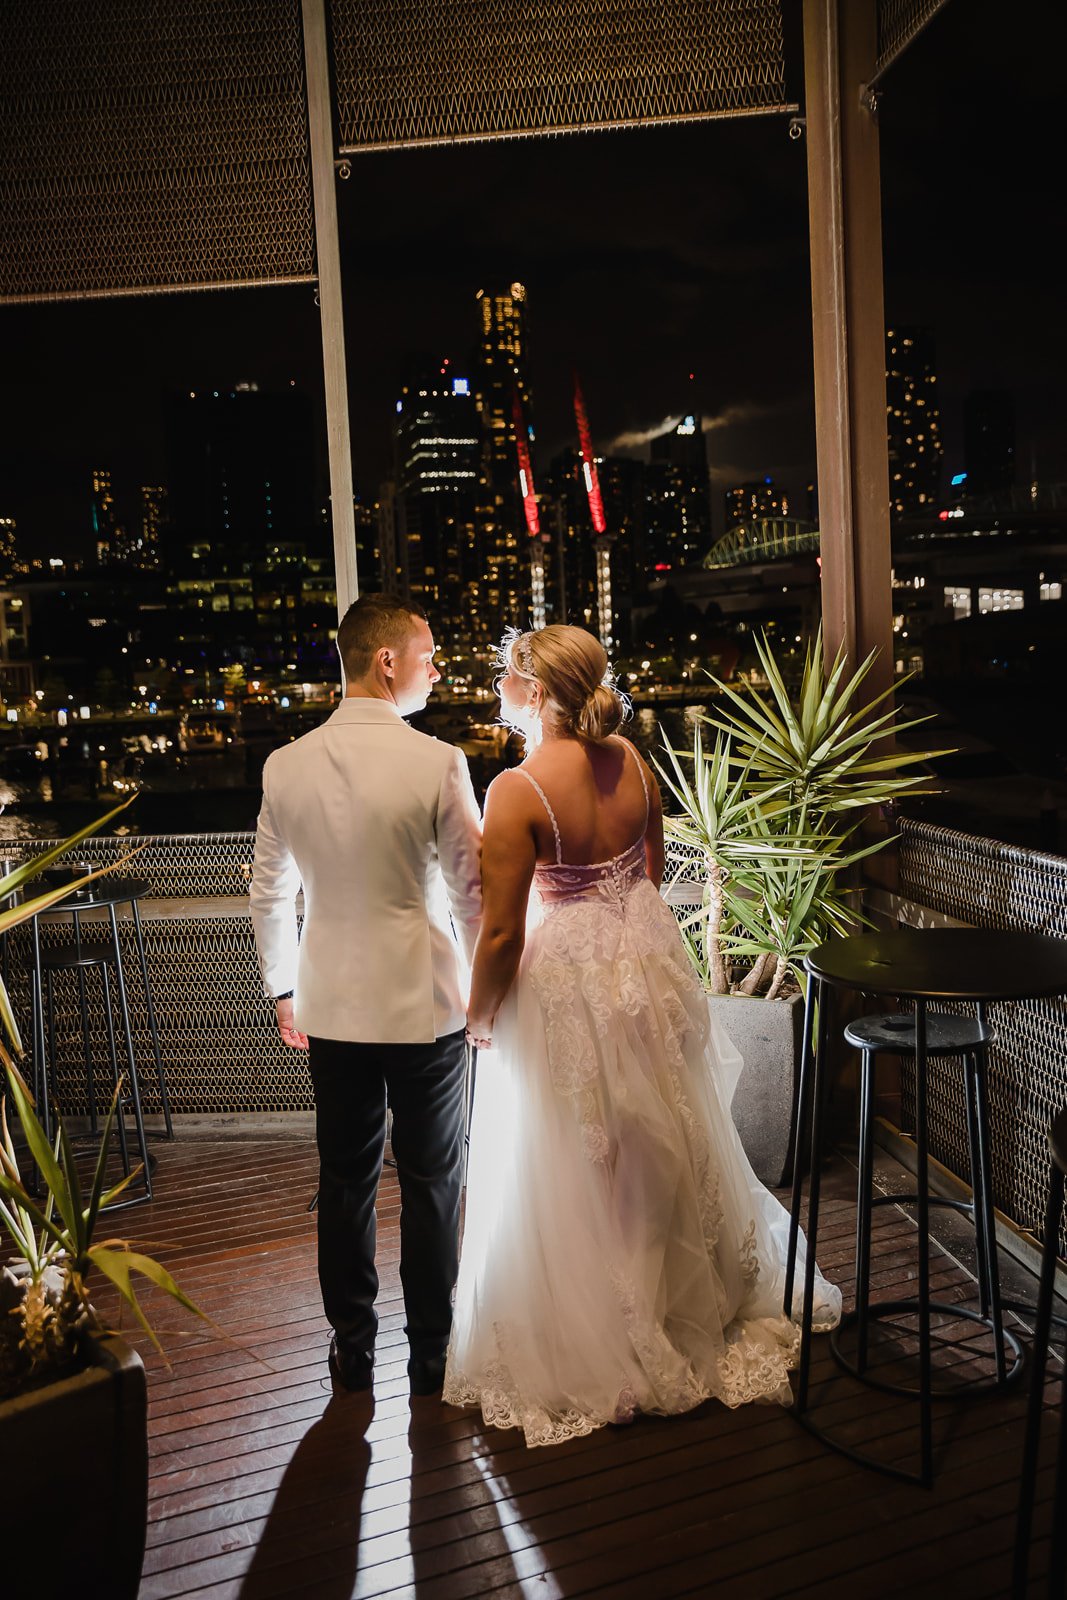 ATEIA Photography & Video - Melbourne Wedding Photography - www.ATEIAphotography.com.au (804 of 910)_websize.jpg